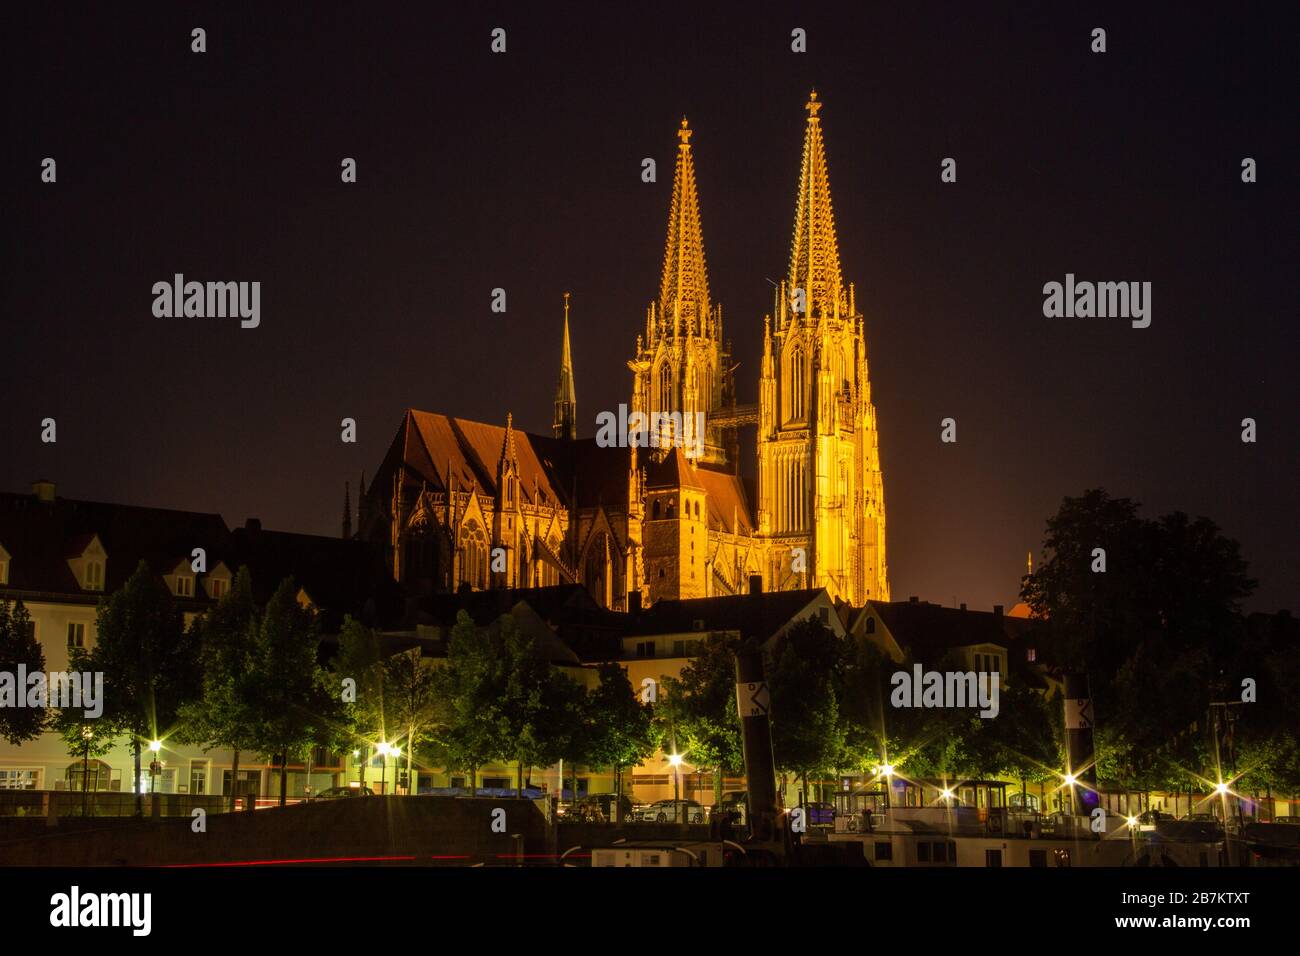 Ratisbona (Regensburg) by Night Stock Photo